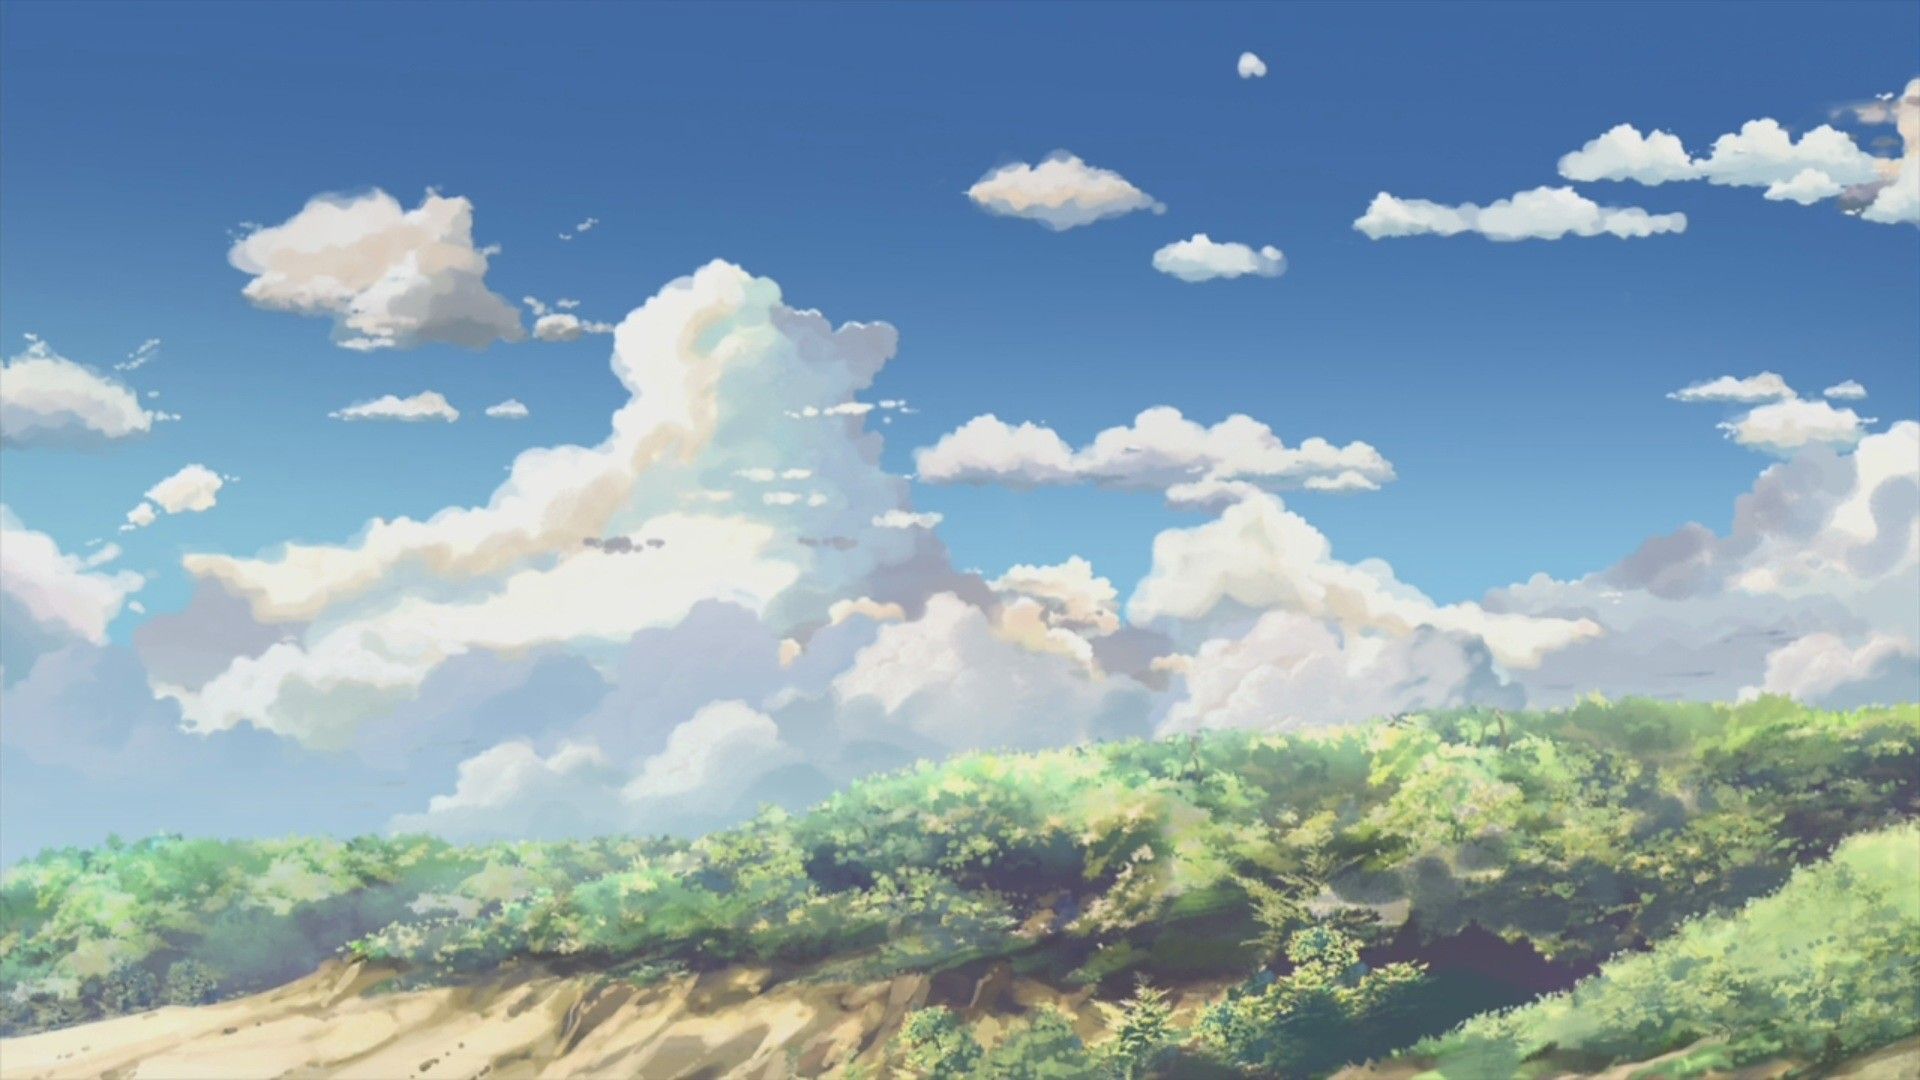 1920x1080 anime landscape wallpaper for your phone - Anime landscape